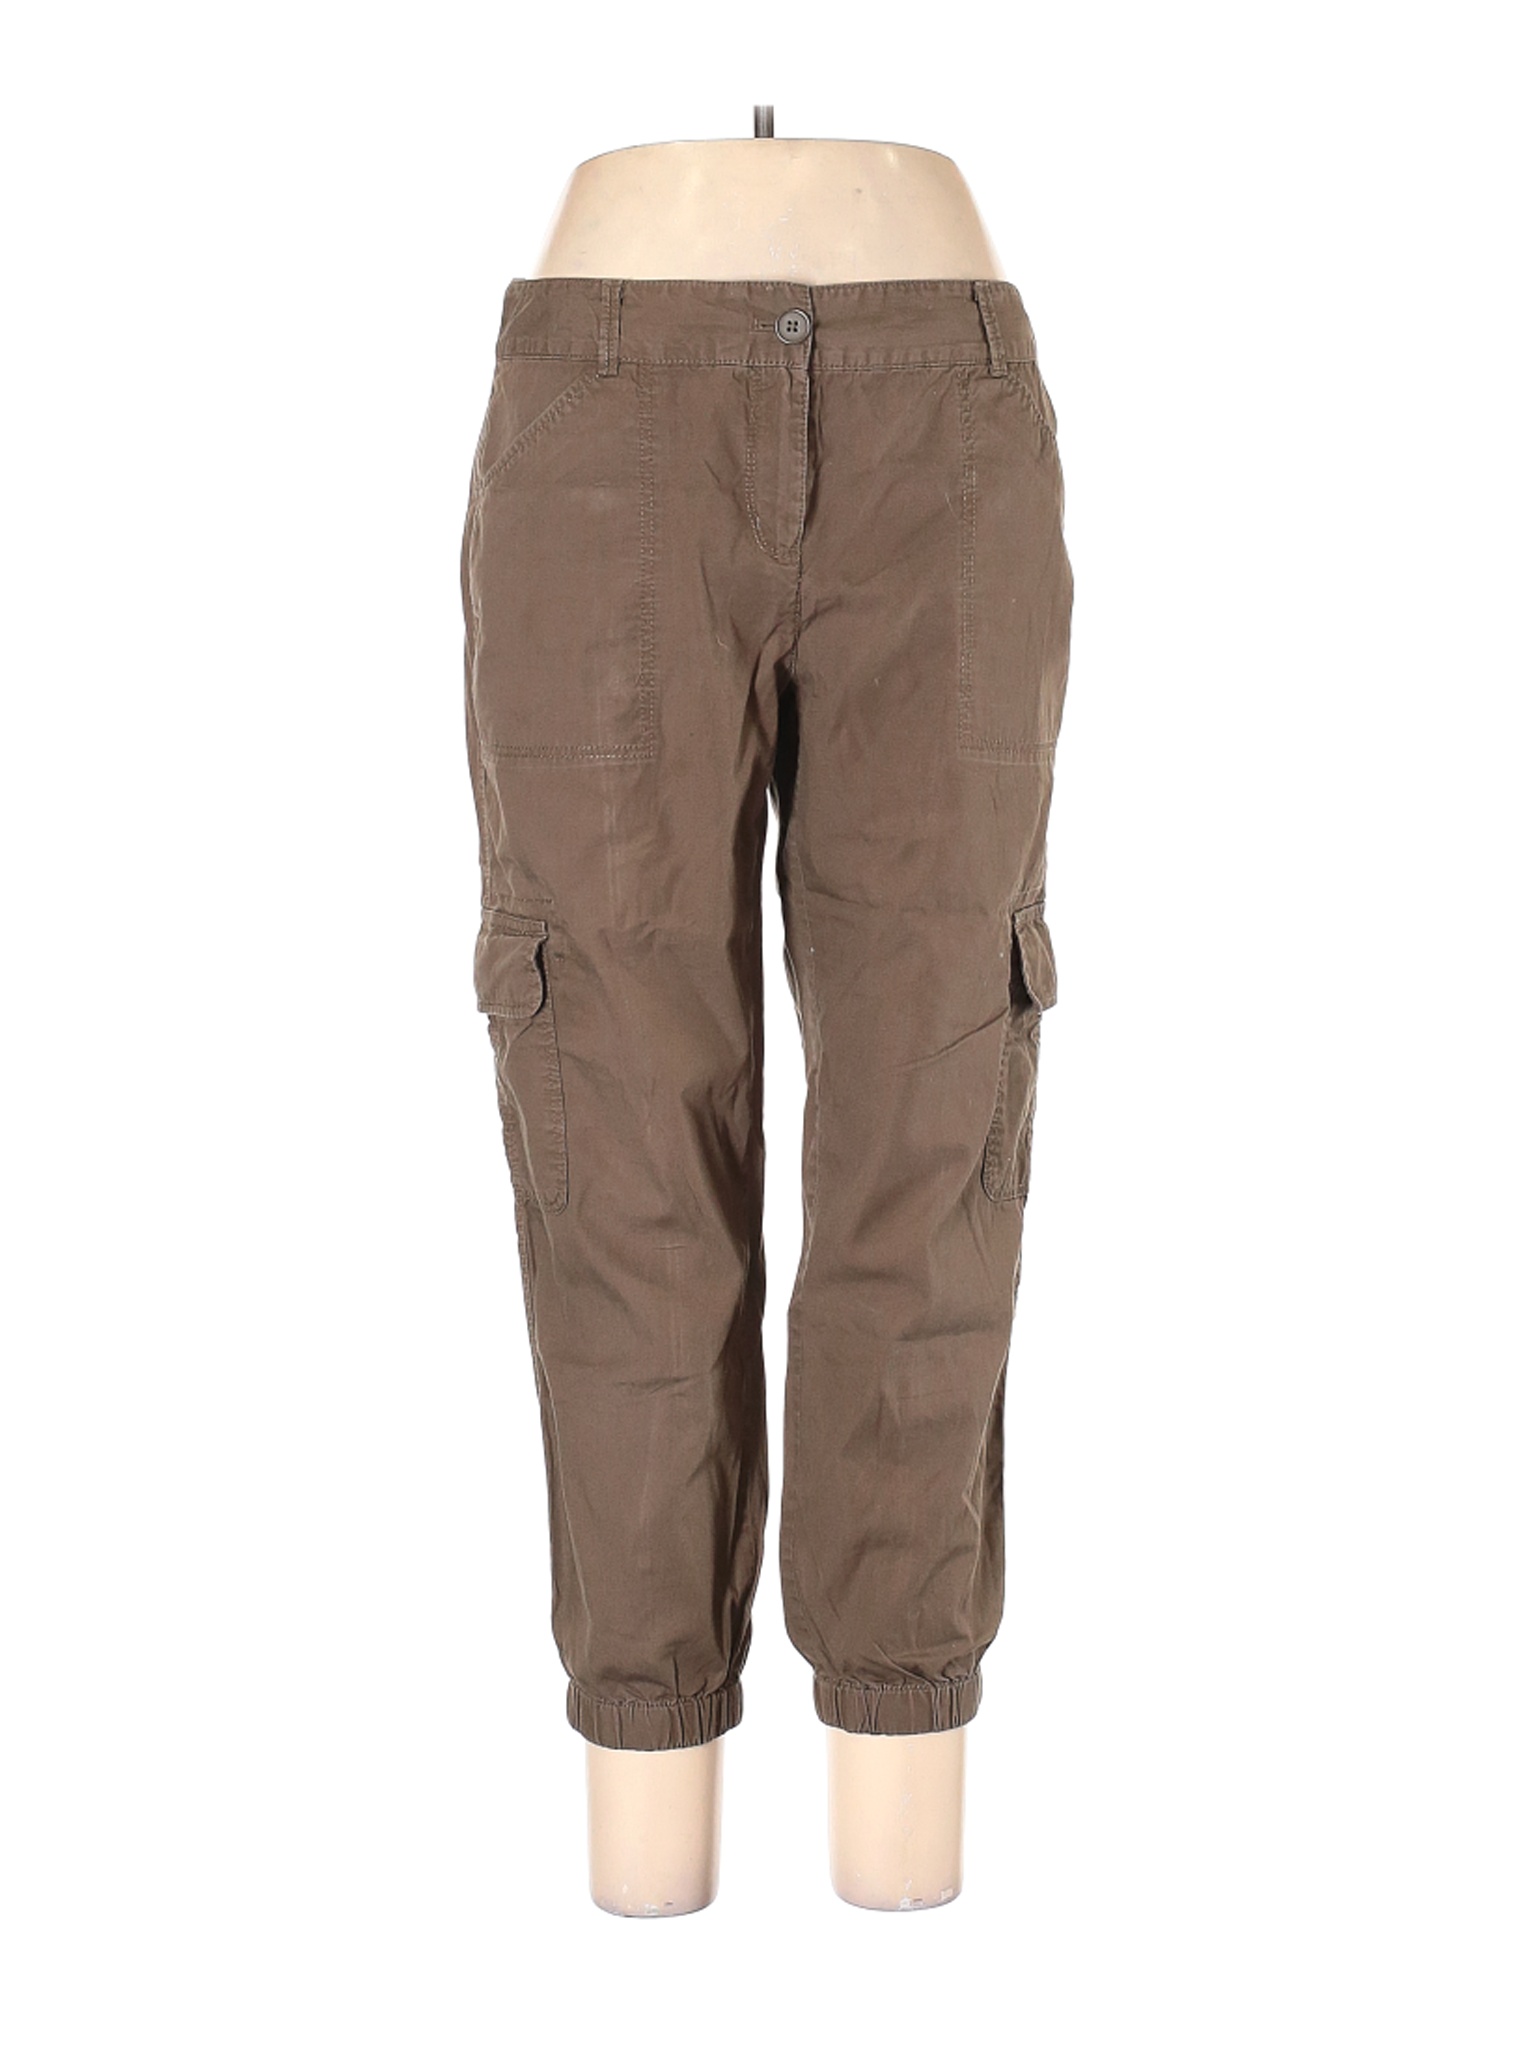 Ann Taylor LOFT Outlet Women Brown Cargo Pants 10 | eBay